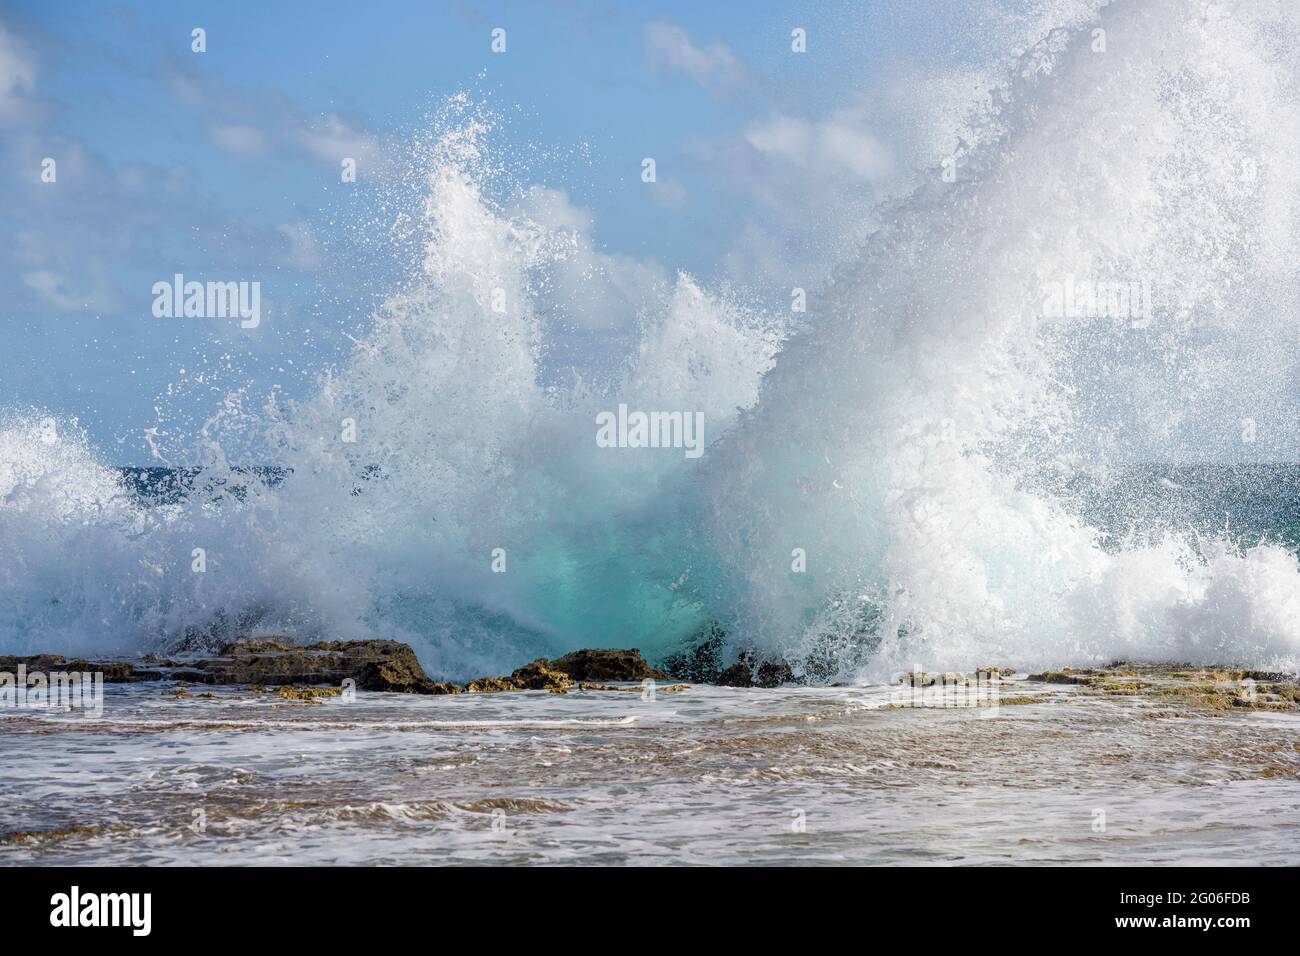 Typical wild coastline of Bonaire, Dutch Caribbean, with waves crushing on rocks. Stock Photo